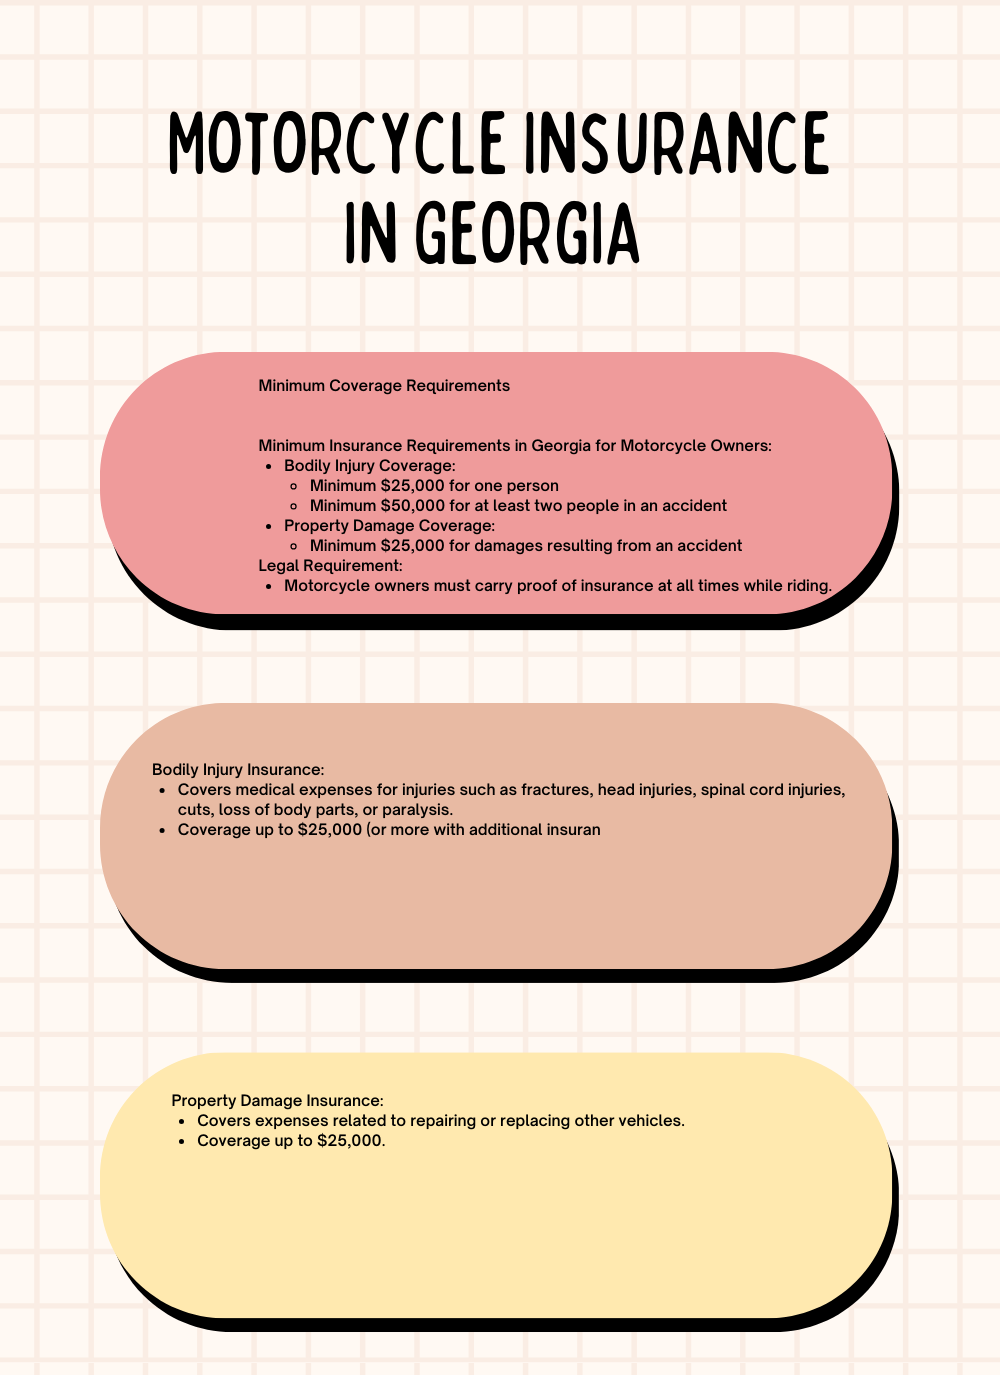 an infographic iluustration of Georgia motorcycelinsurance